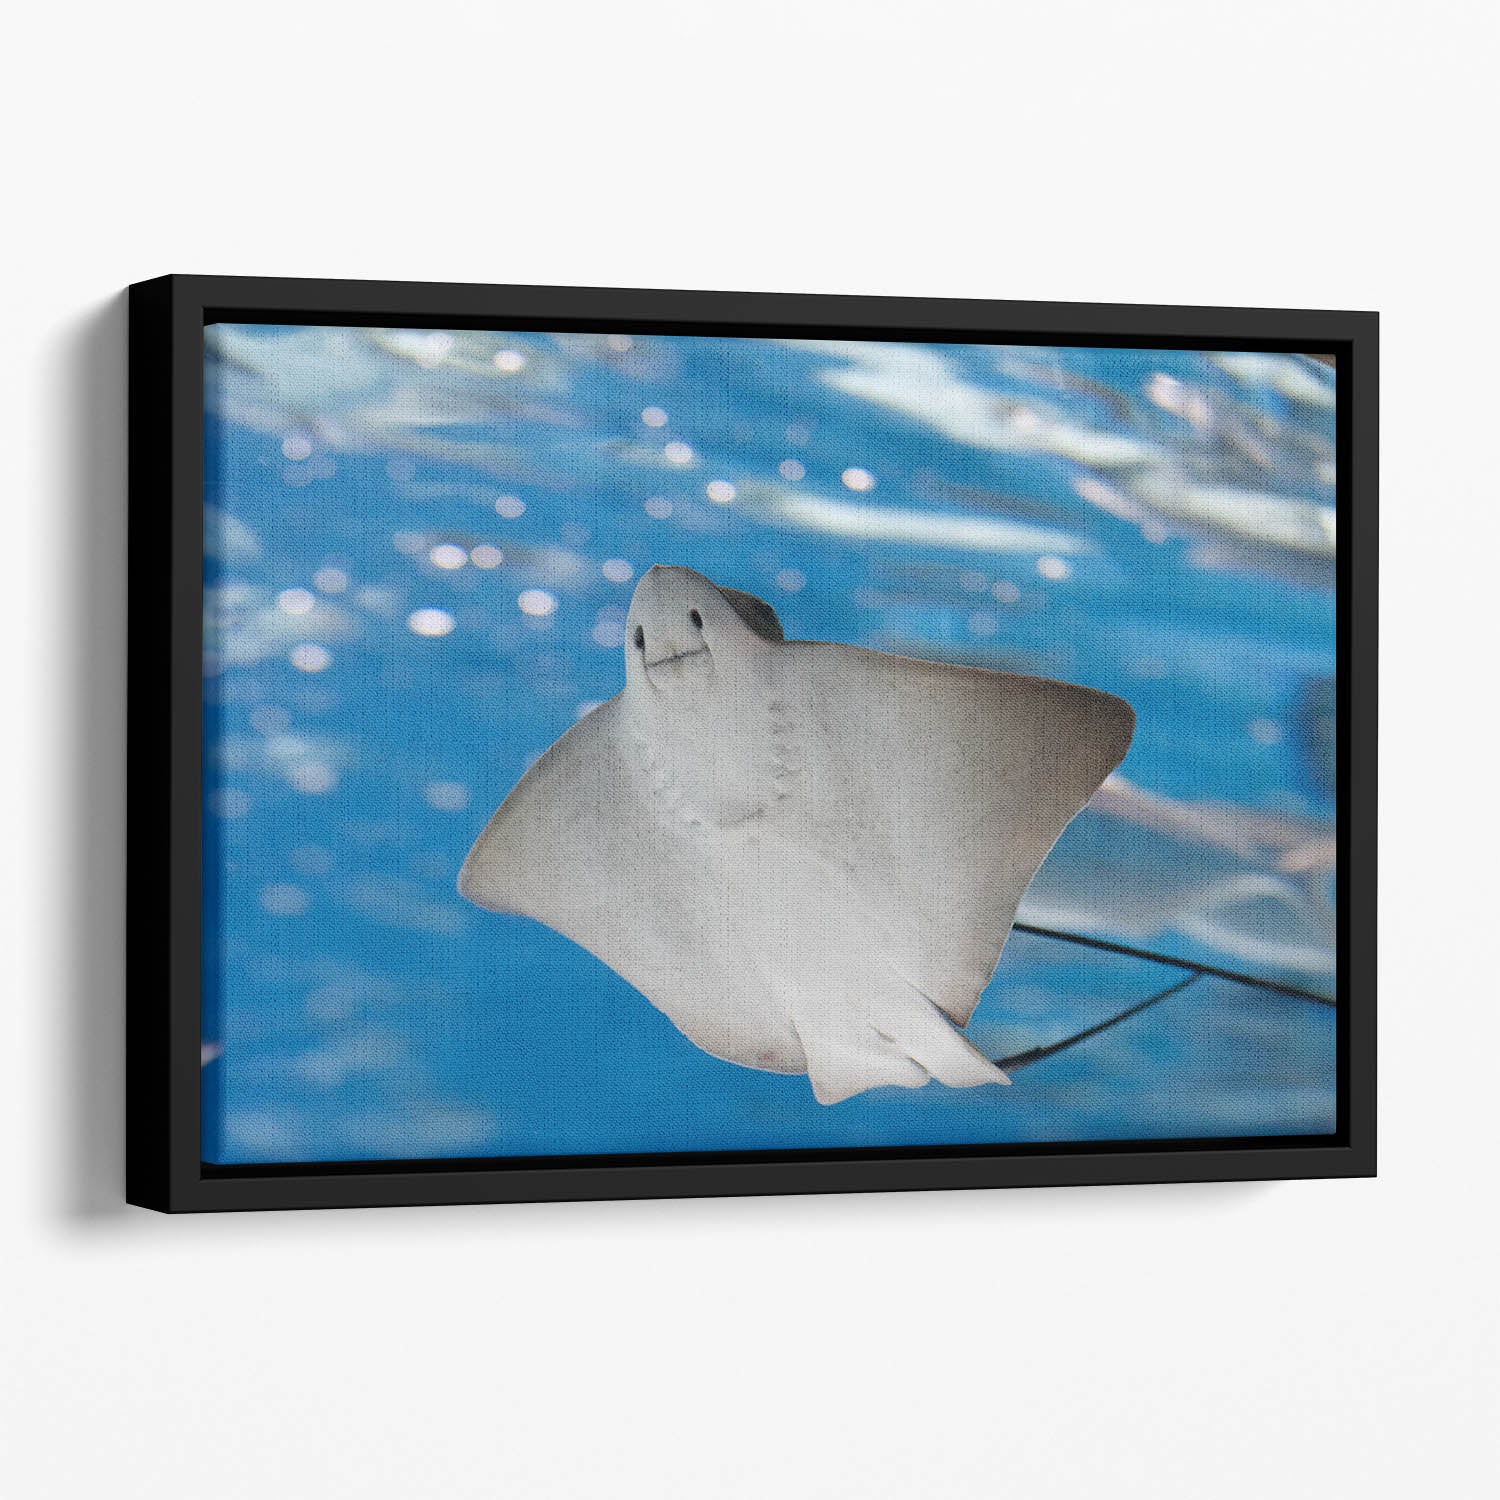 Sea stingray and marine life Floating Framed Canvas